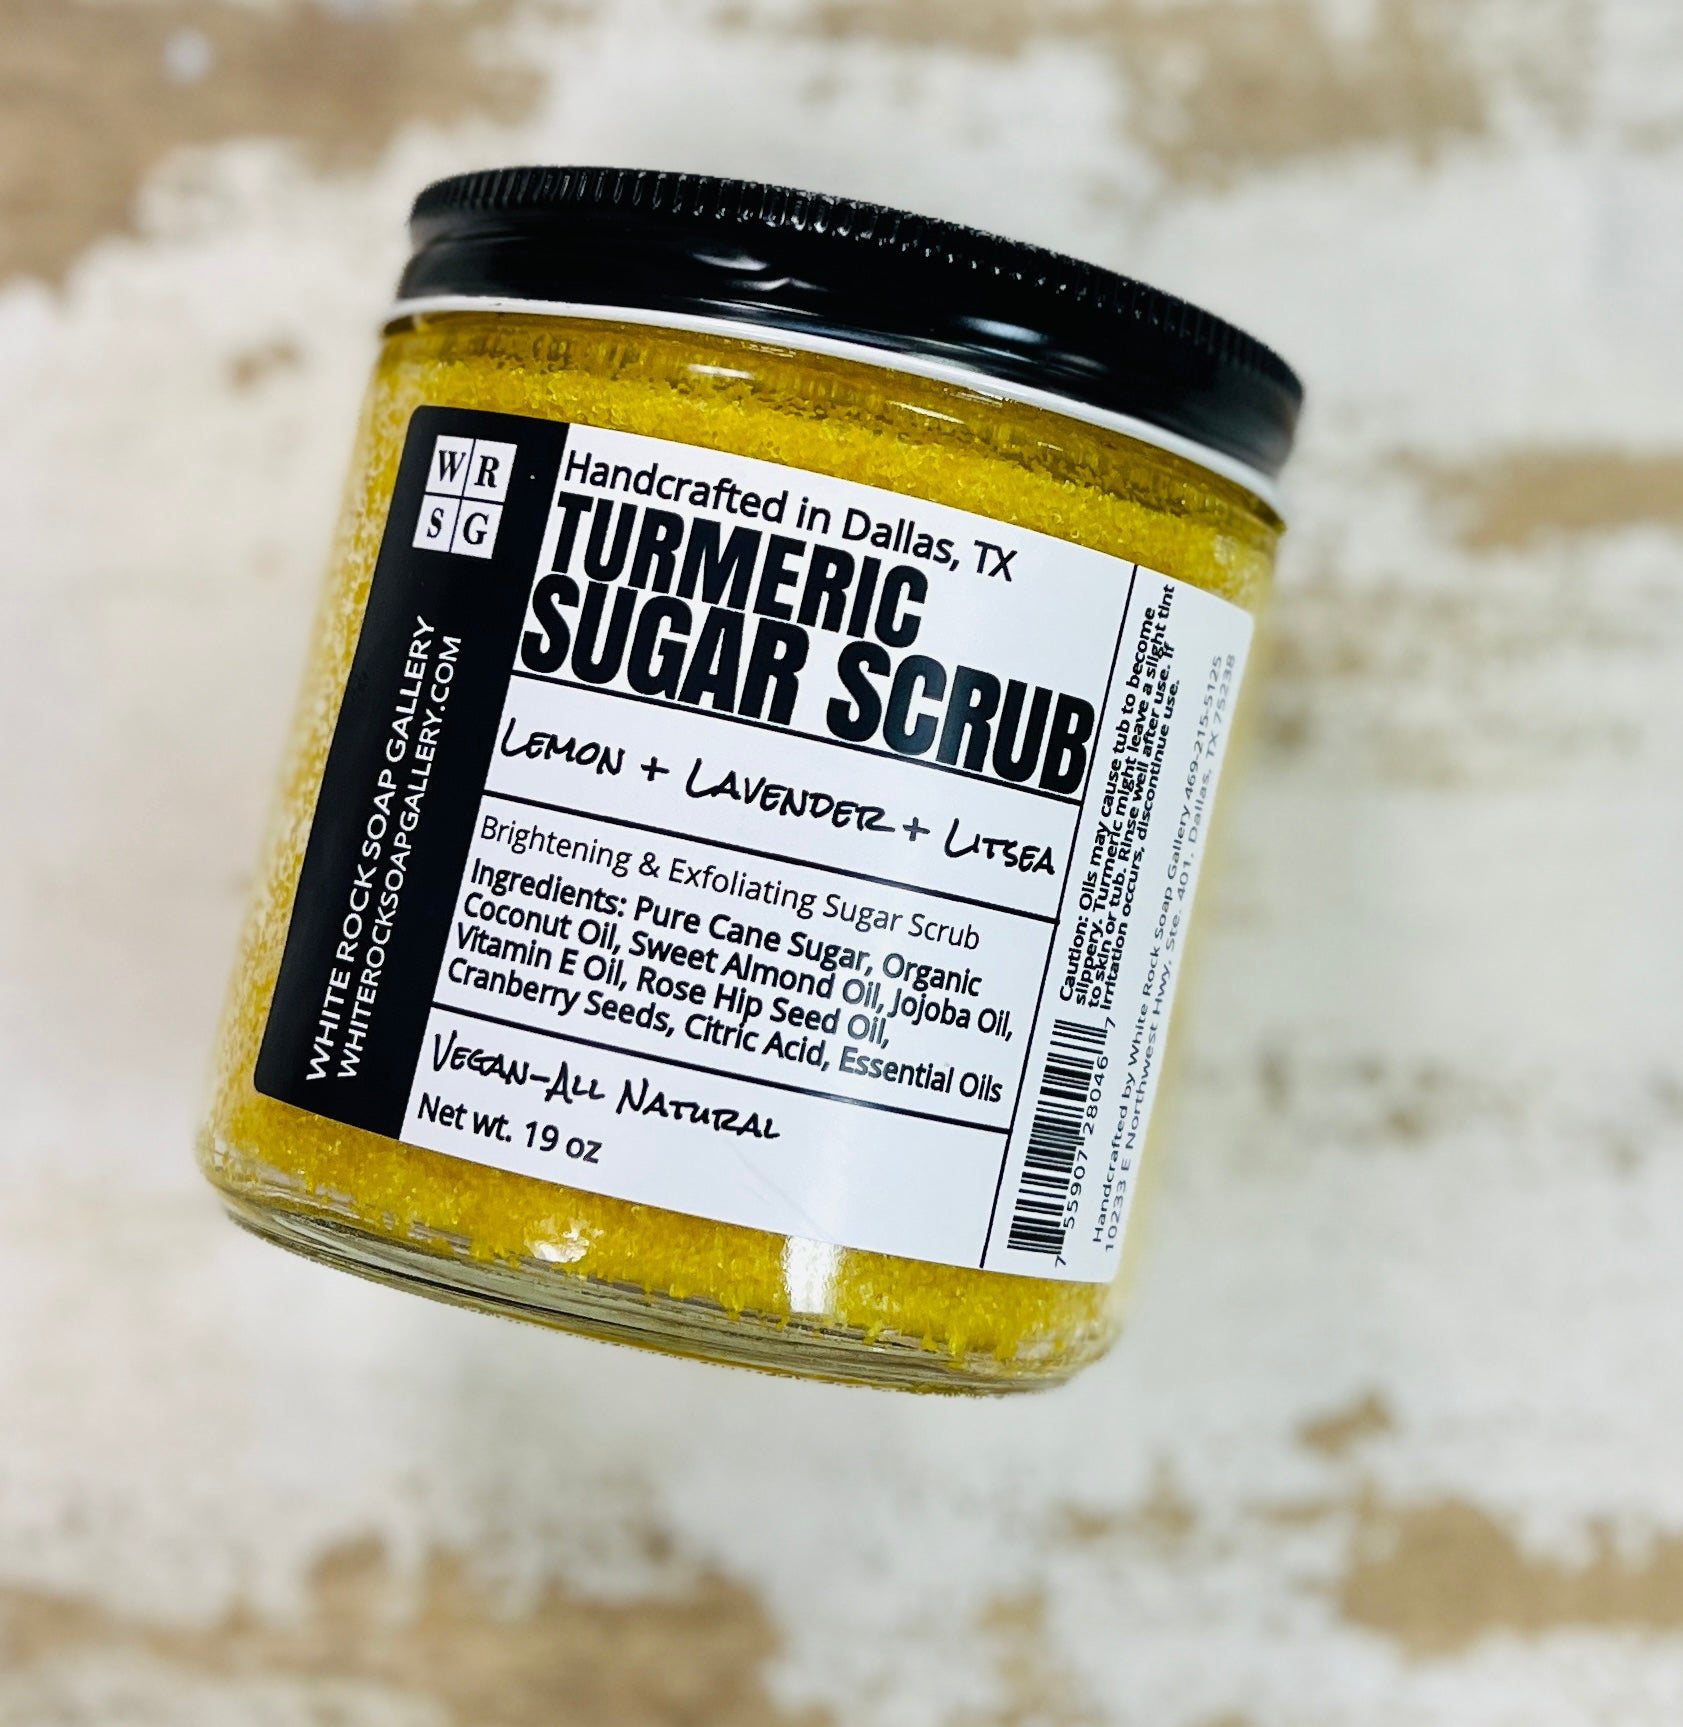 Turmeric Sugar Scrub - New!